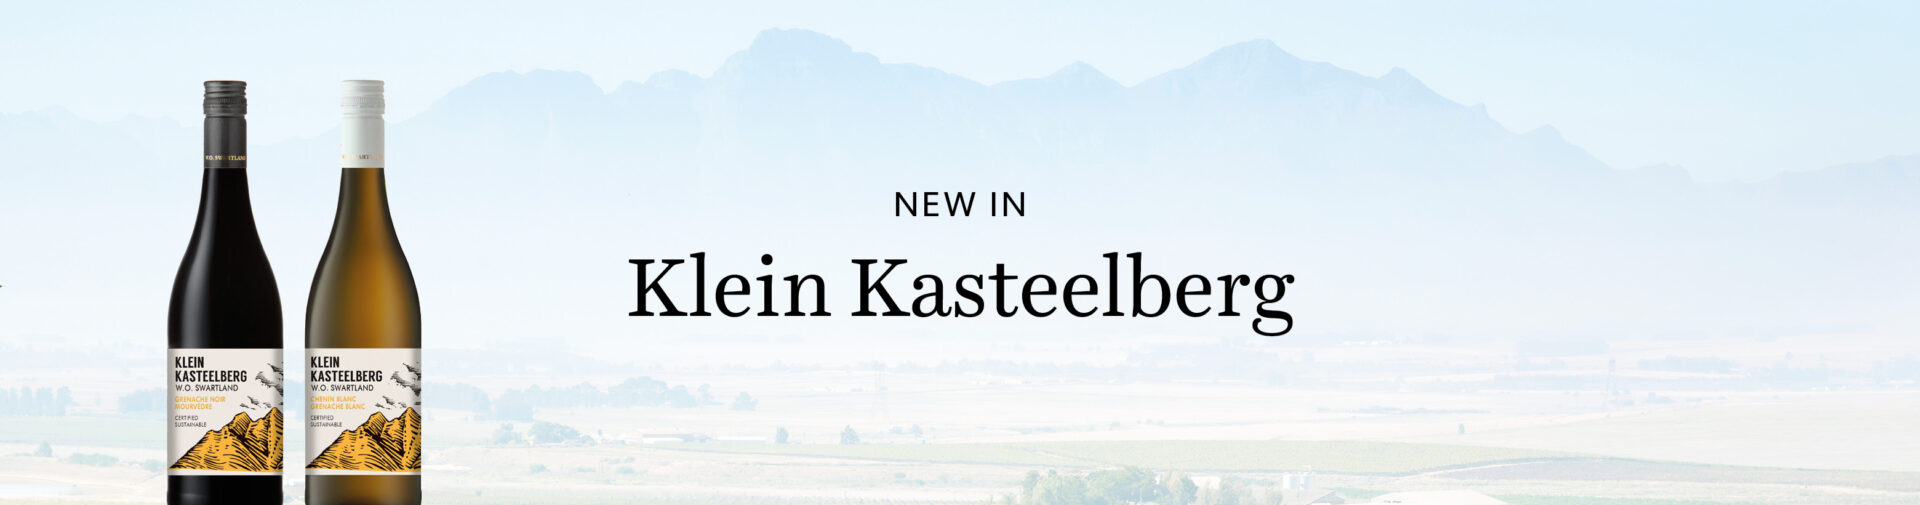 Klein Kasteelberg